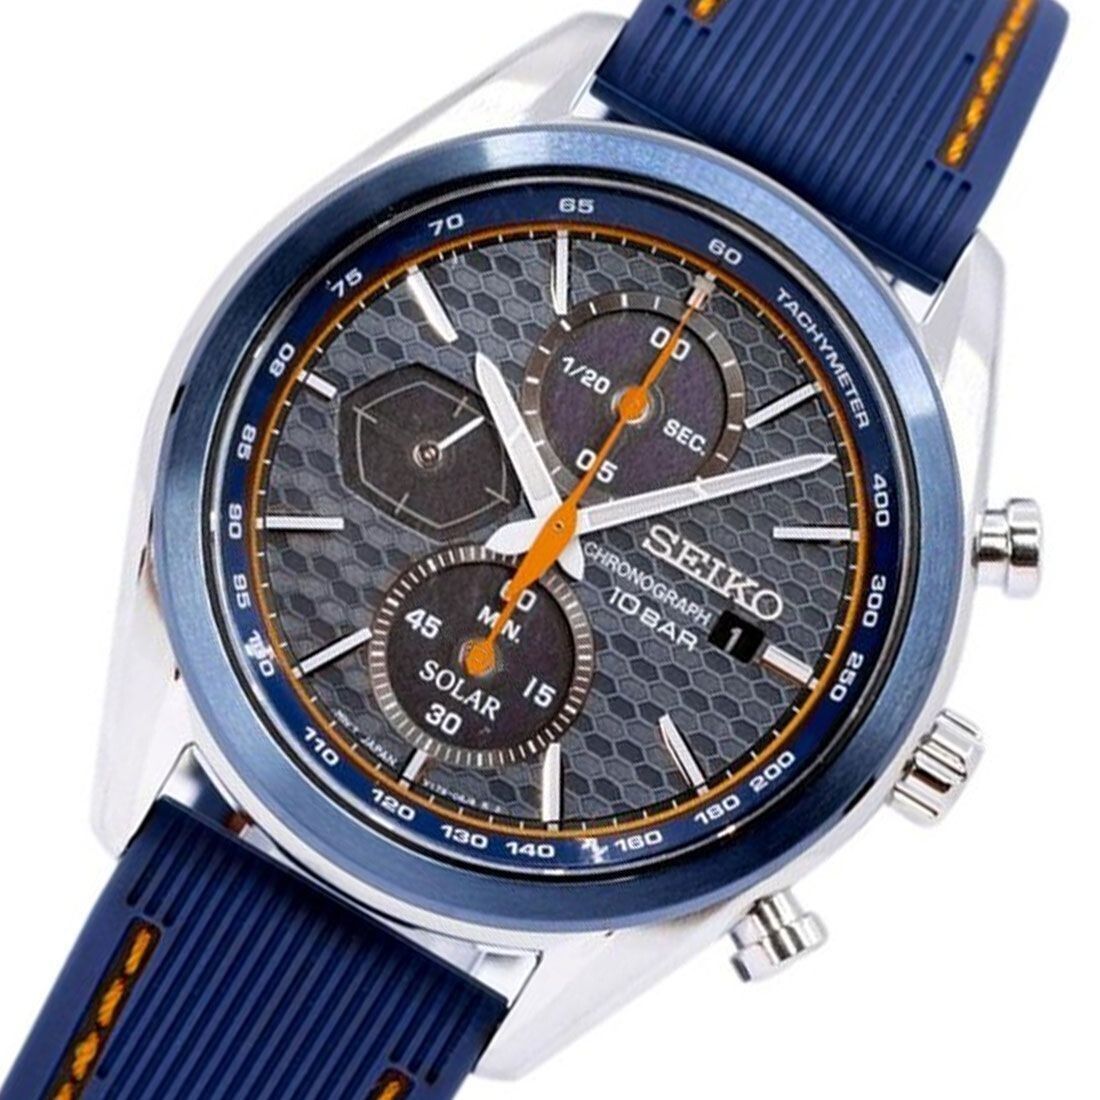 Seiko Solar Macchina Sportiva SSC775P1 41.4mm solar chronograph sport men’s watch sapphire crystal 100m WR silicon band